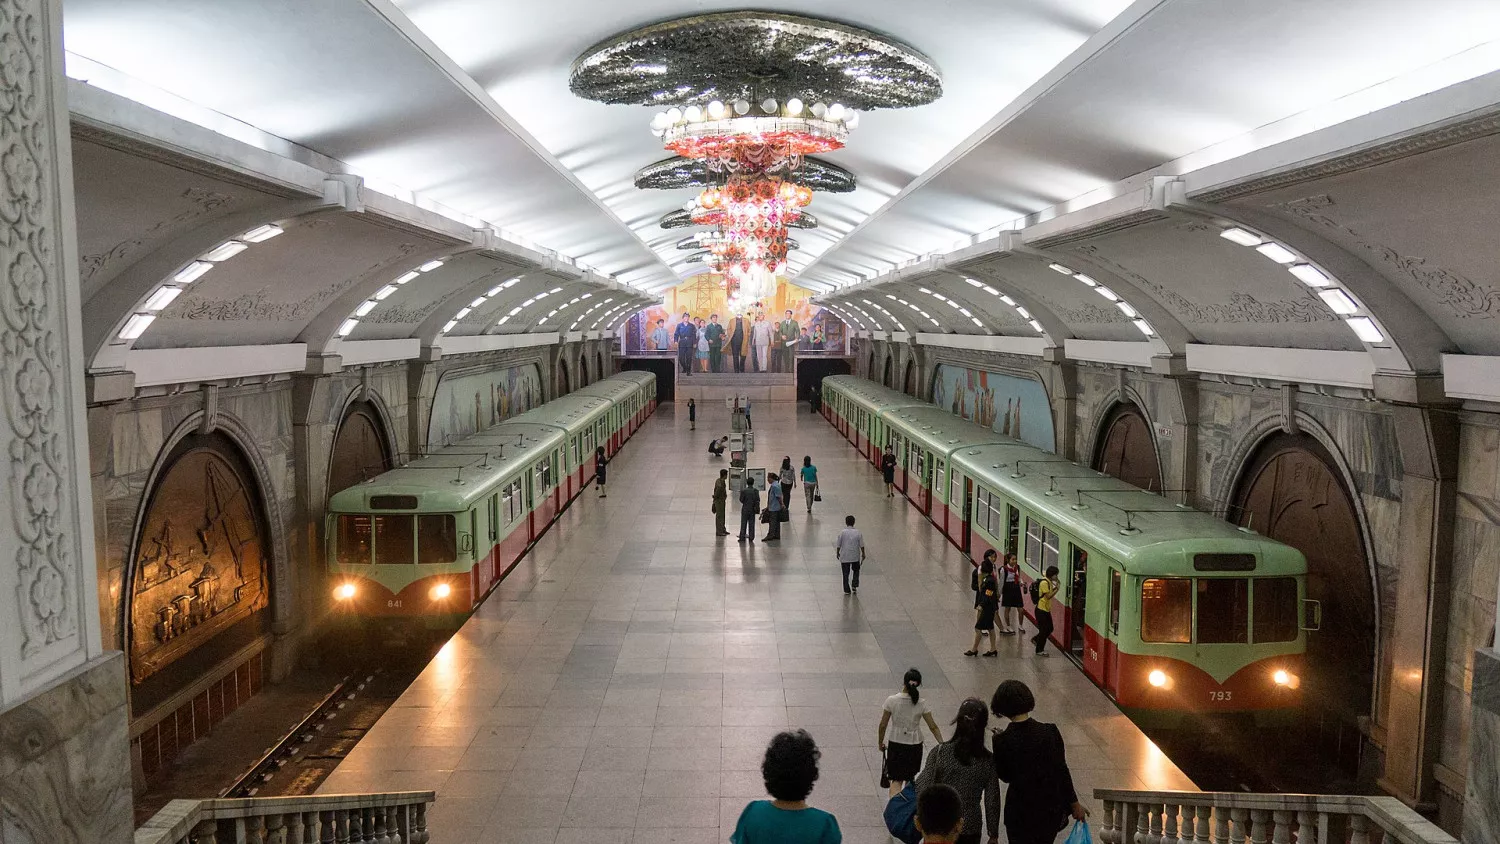 Puhung Metro Station - 부흥역 - Pyongyang - North Korea